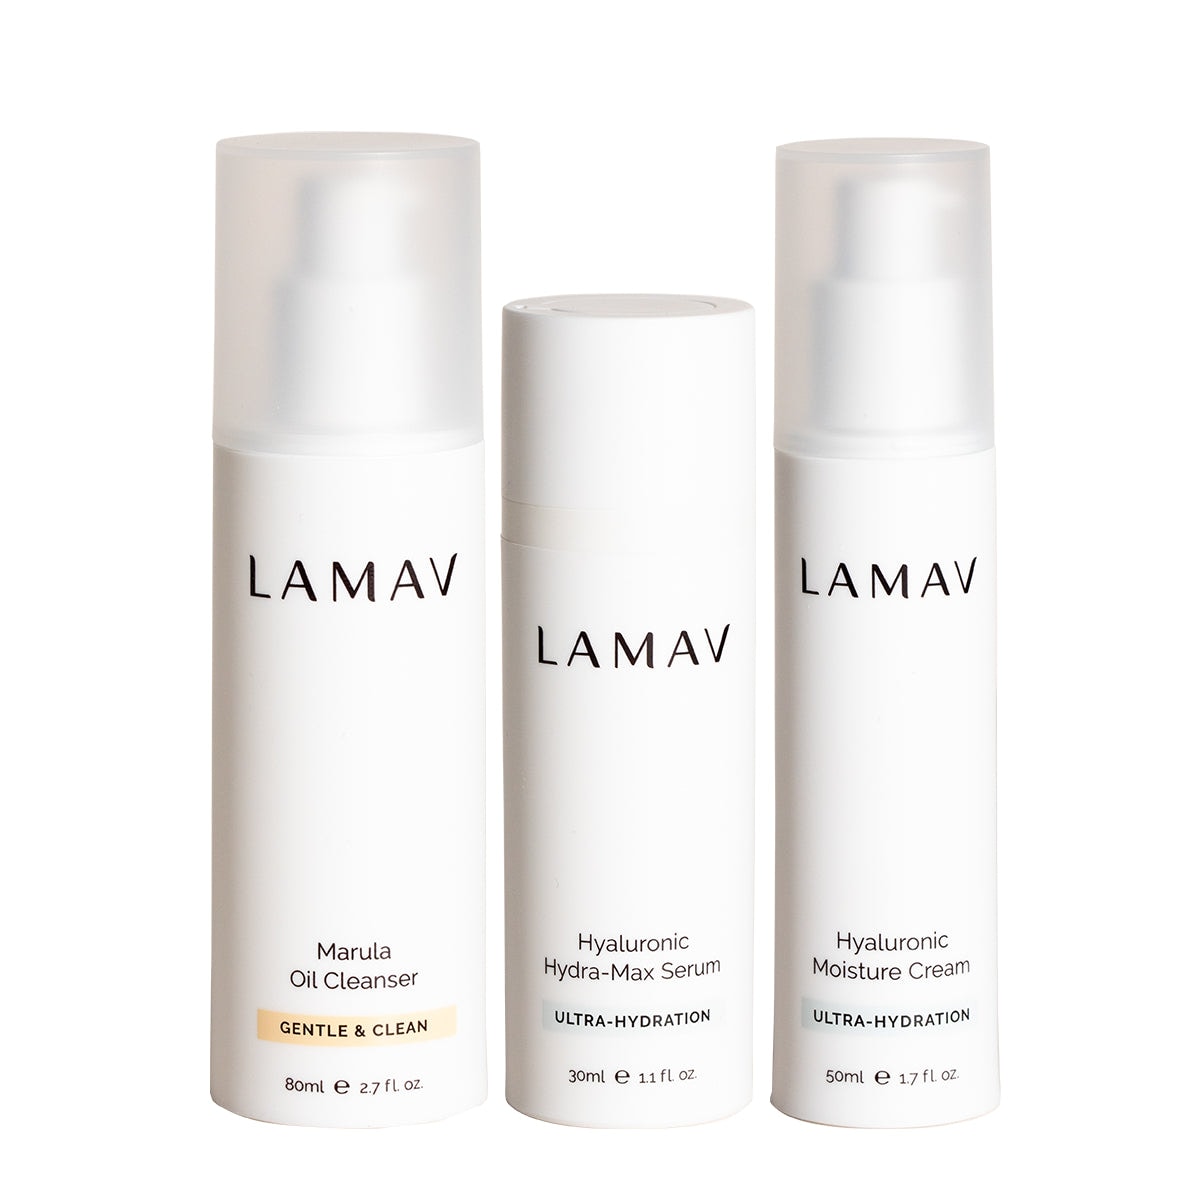 LAMAV Organic Skincare Essentials Hydration 3 Pack